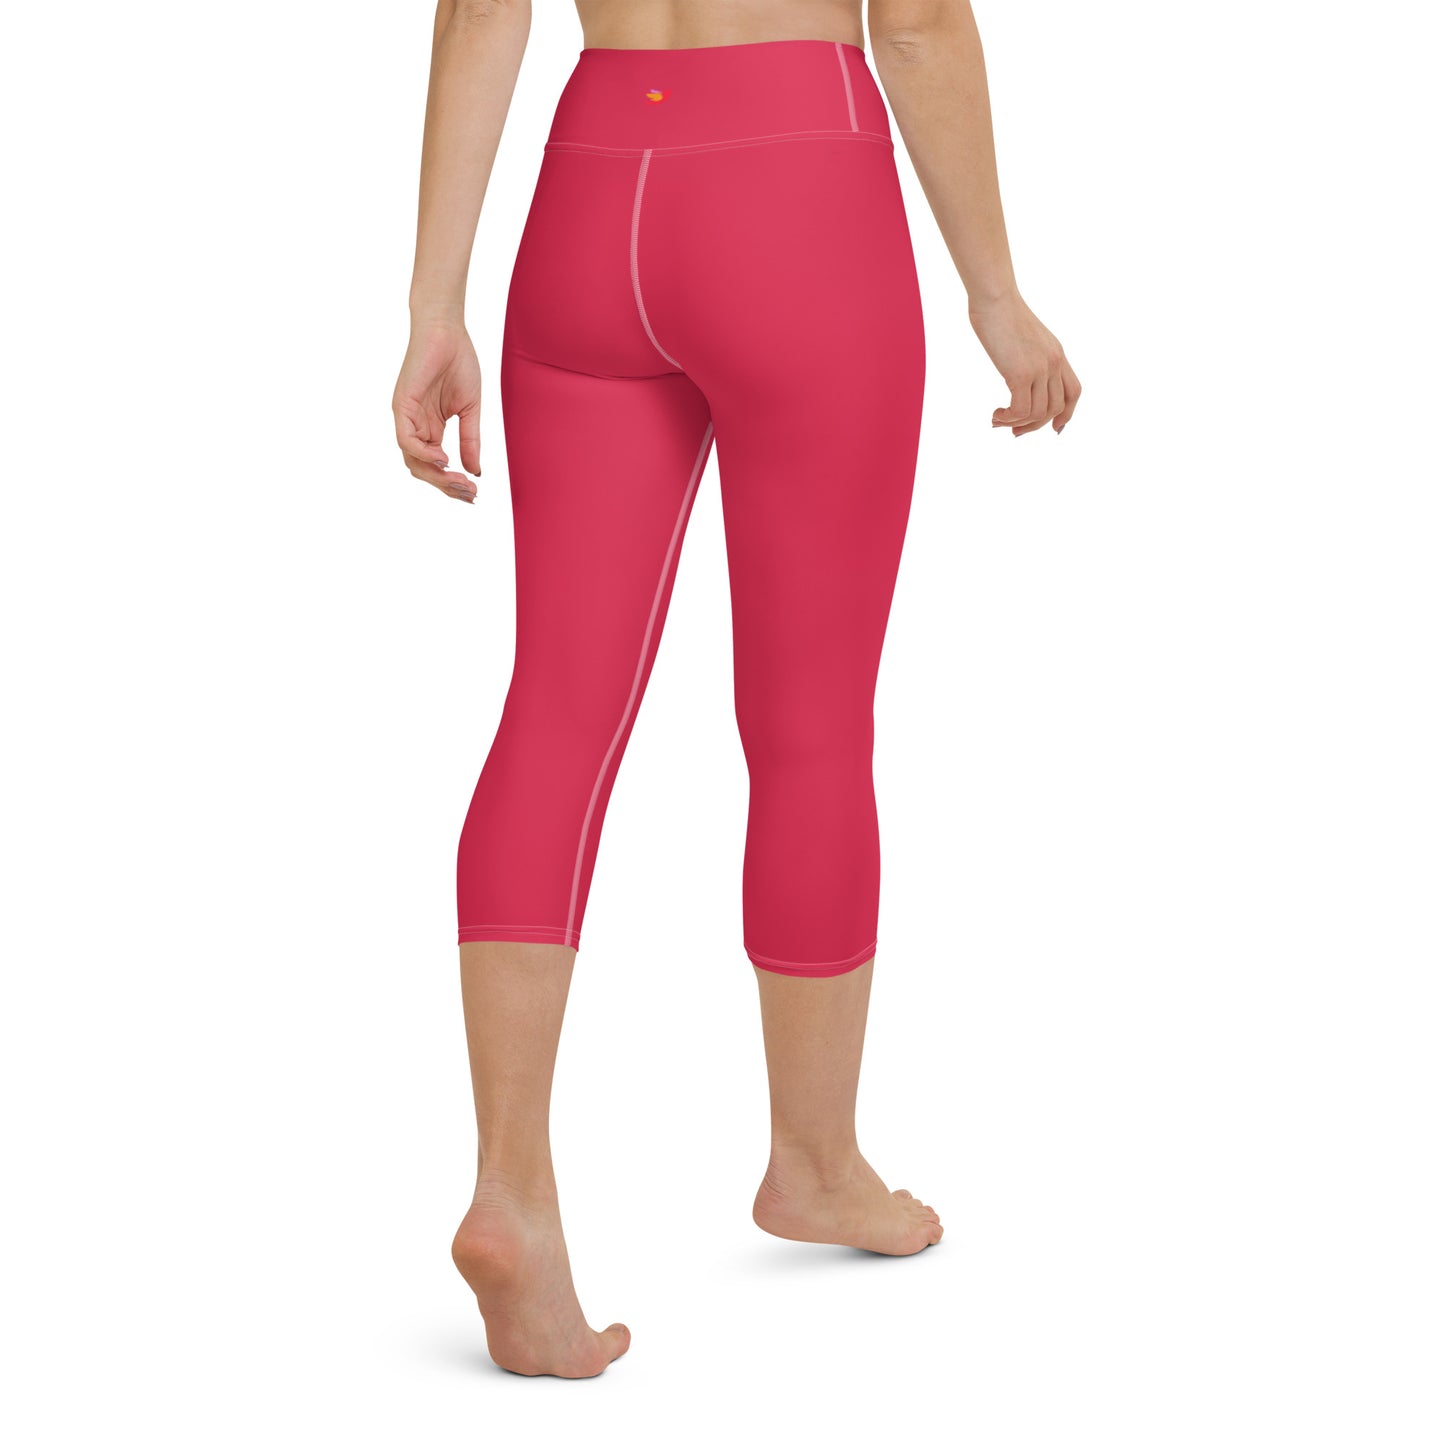 Milano Solid Red Capri High Waist Yoga Leggings / Pants with Inside Pocket